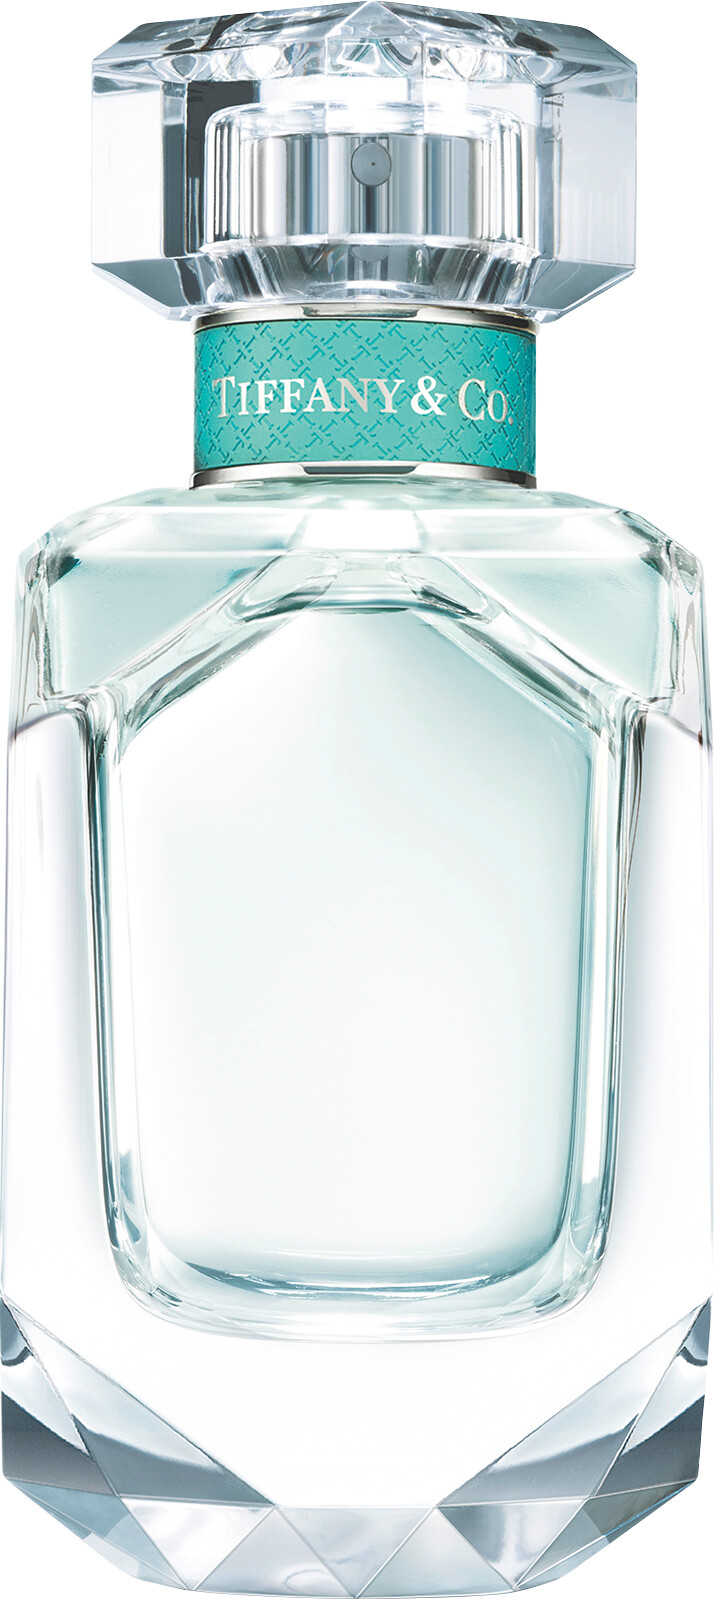 Tiffany & Co Eau de Parfum Spray 50ml